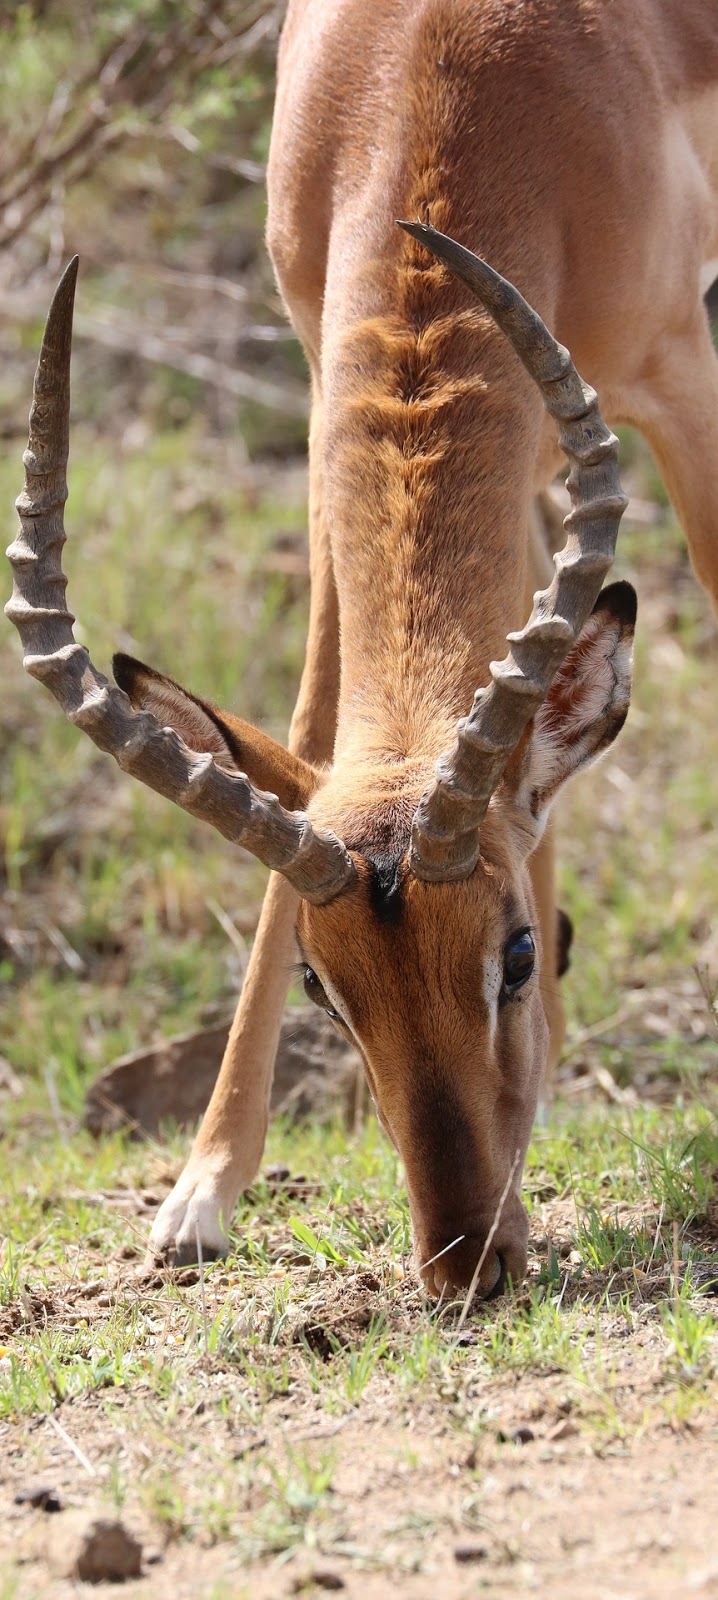 An impala eating grass.